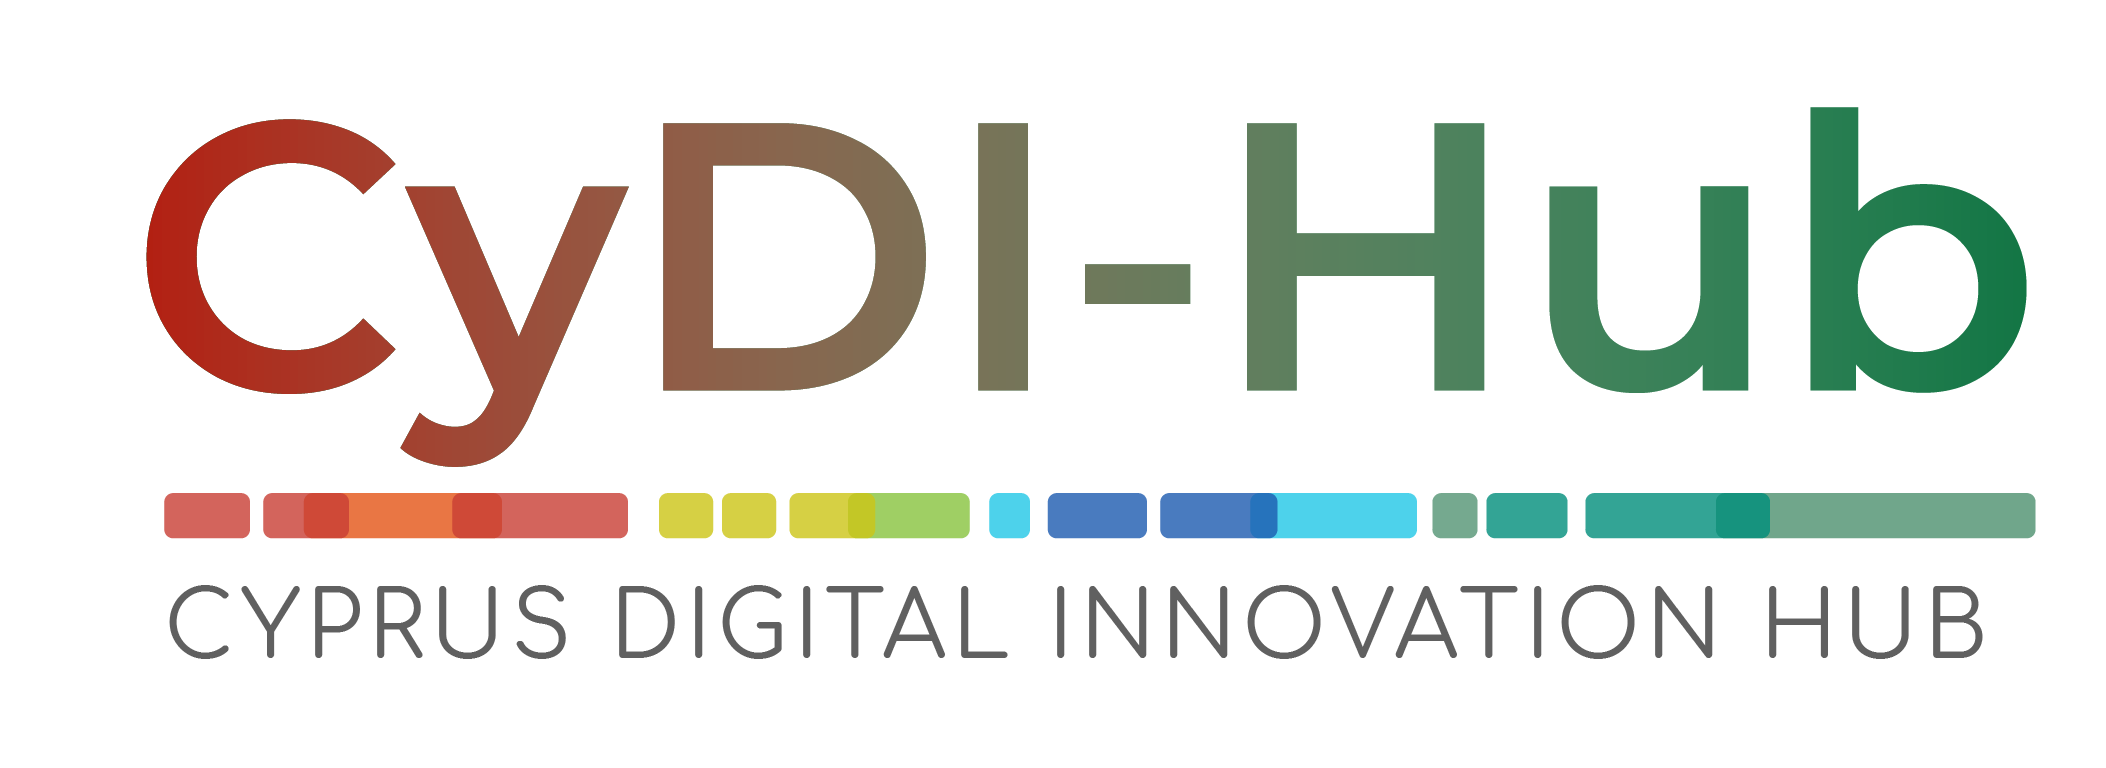 Cyprus Digital Innovation Hub